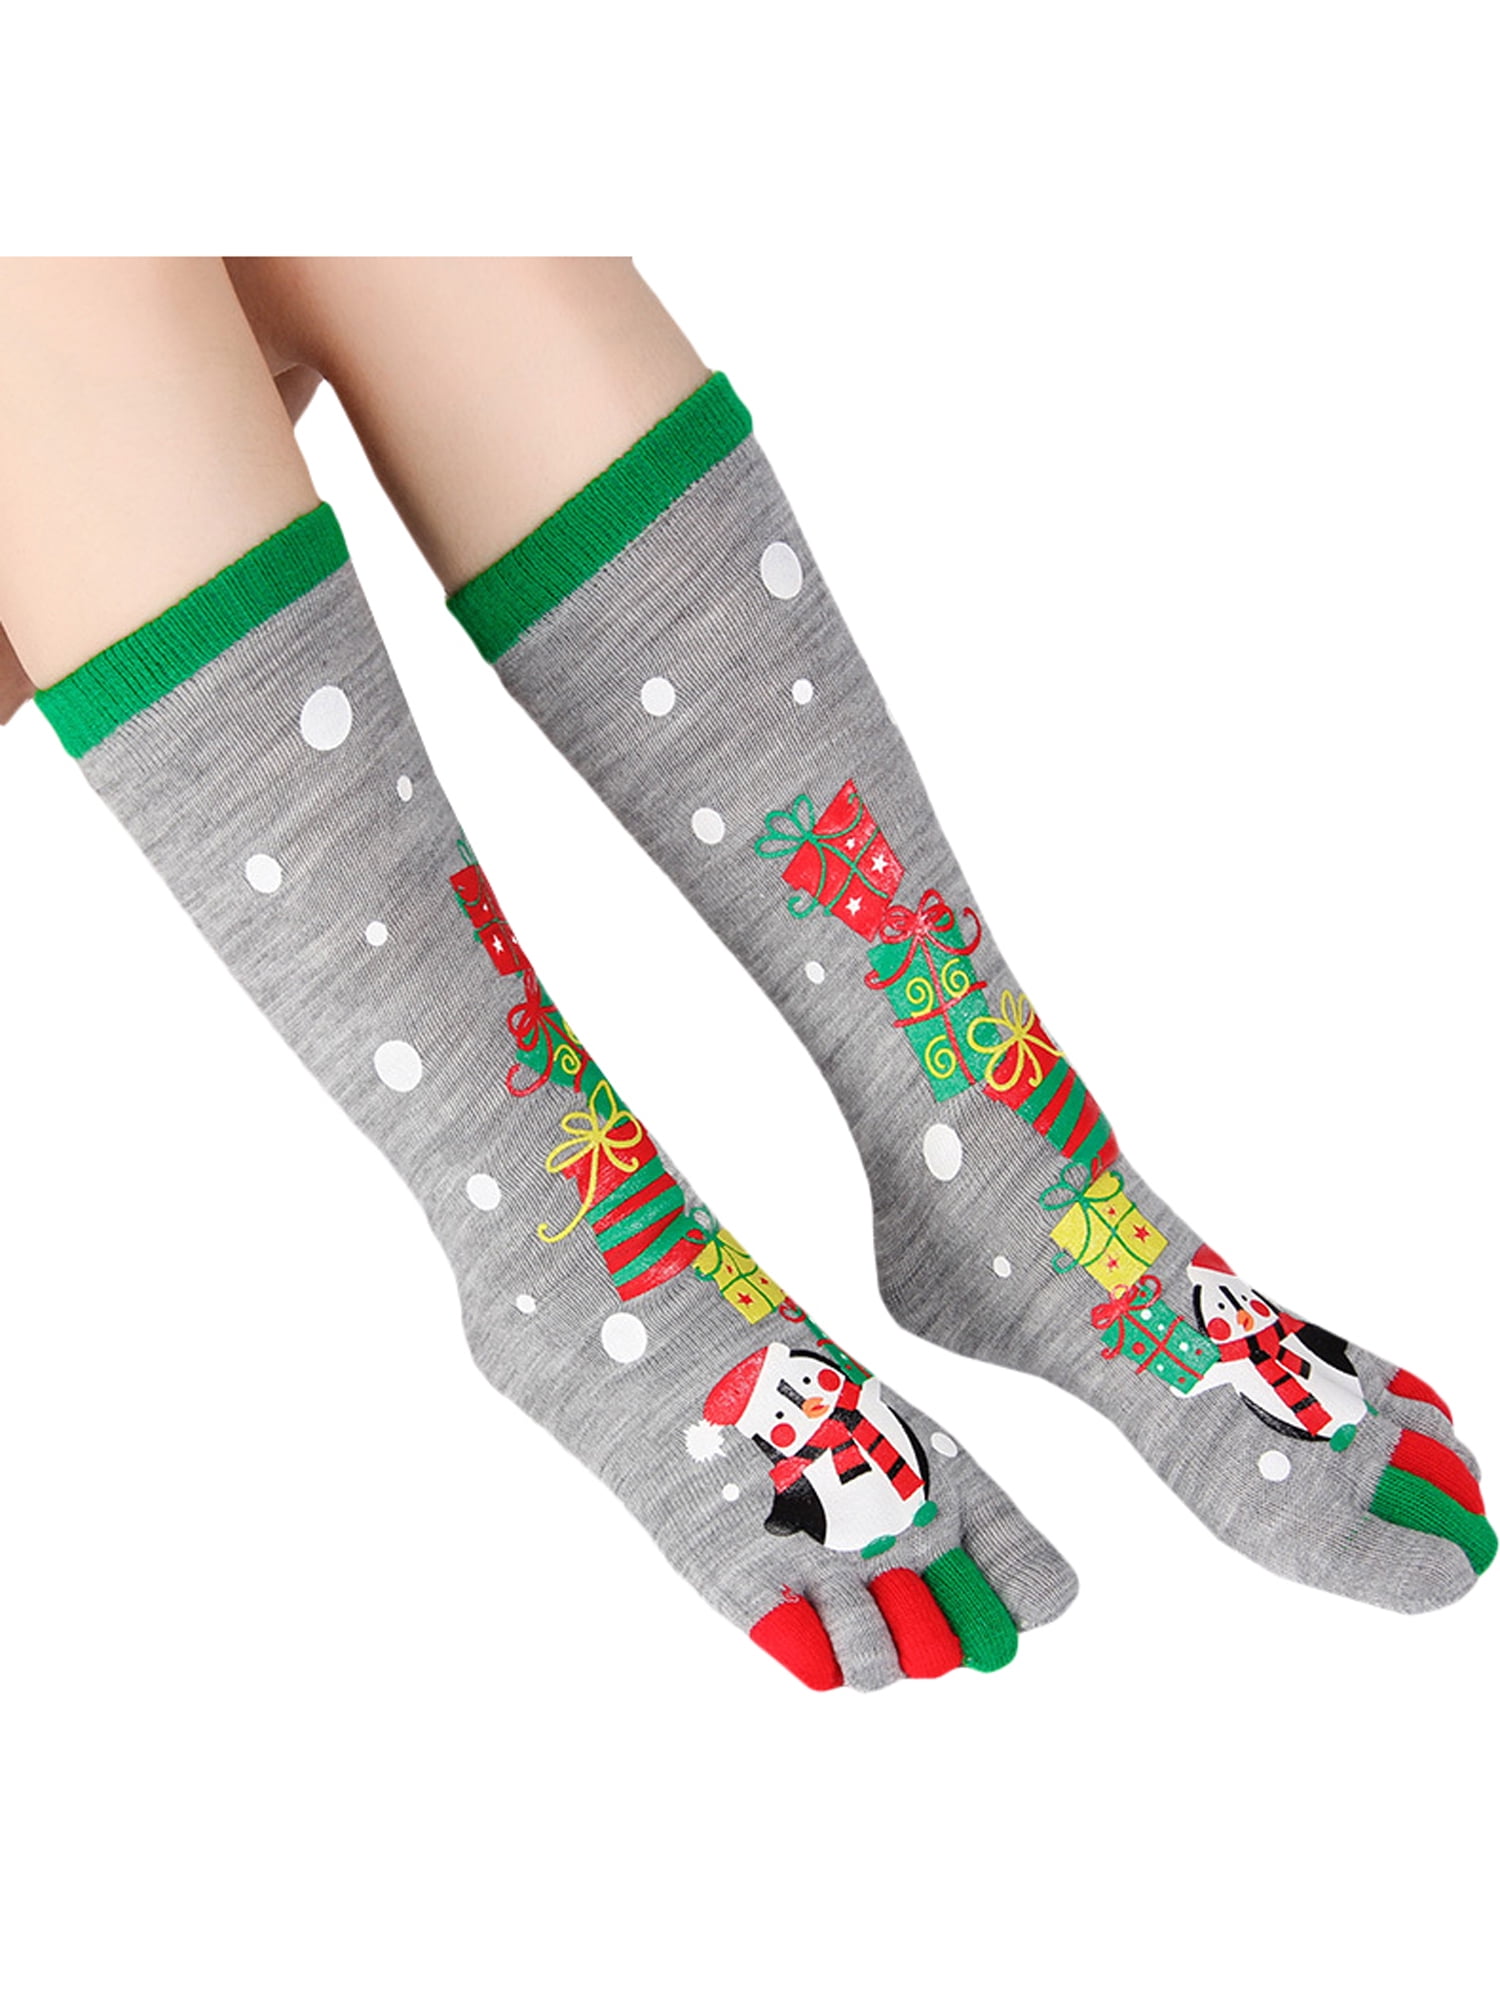 Christmas Unisec Print Colorful Toe Socks Five Finger Socks Cotton Stockings